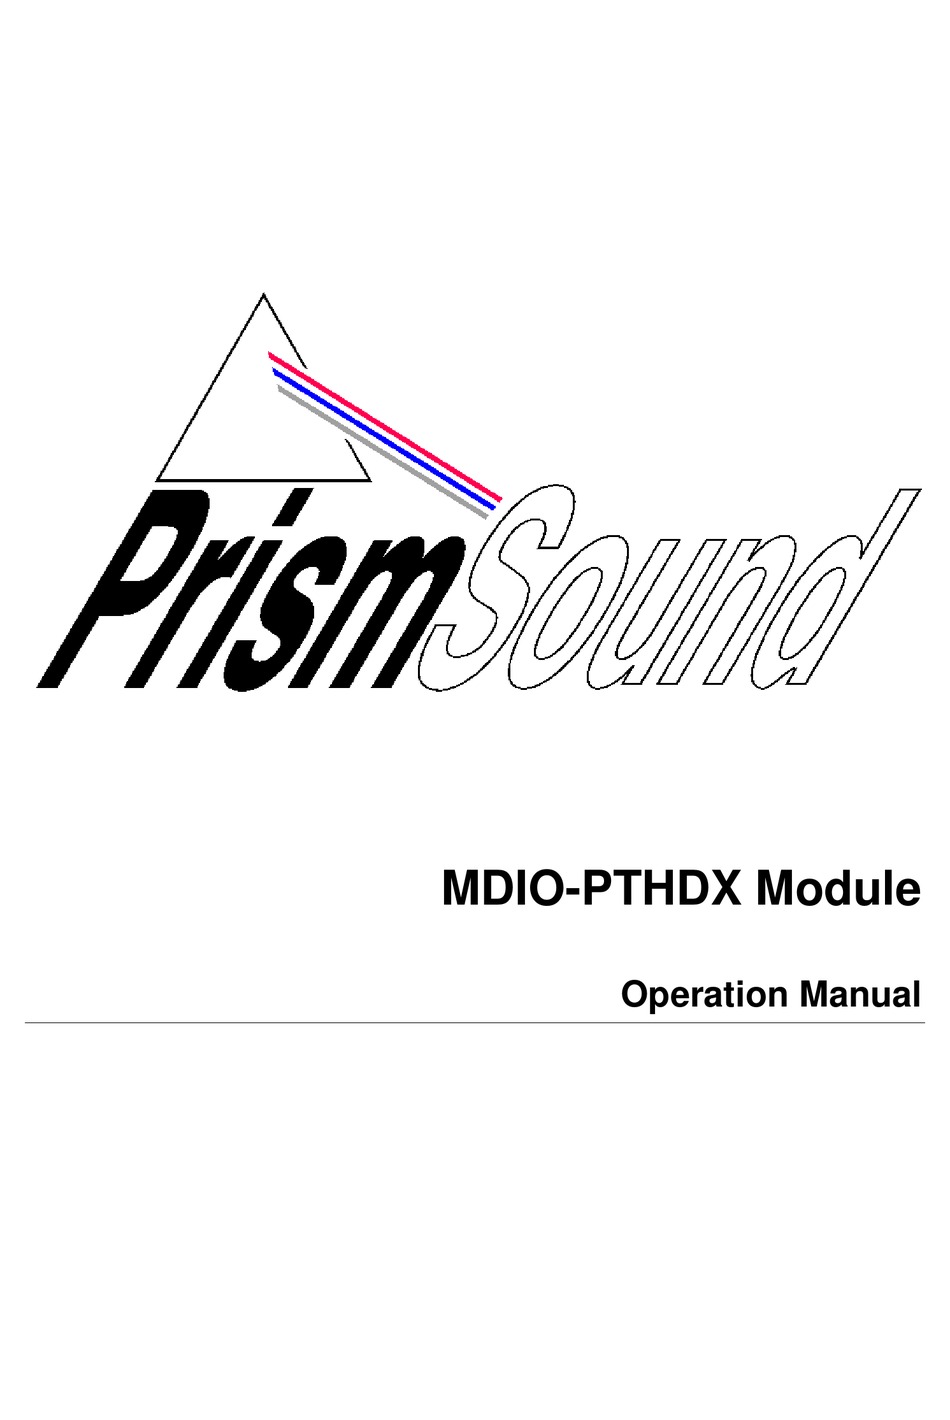 PRISM SOUND MDIO-PTHDX OPERATION MANUAL Pdf Download | ManualsLib